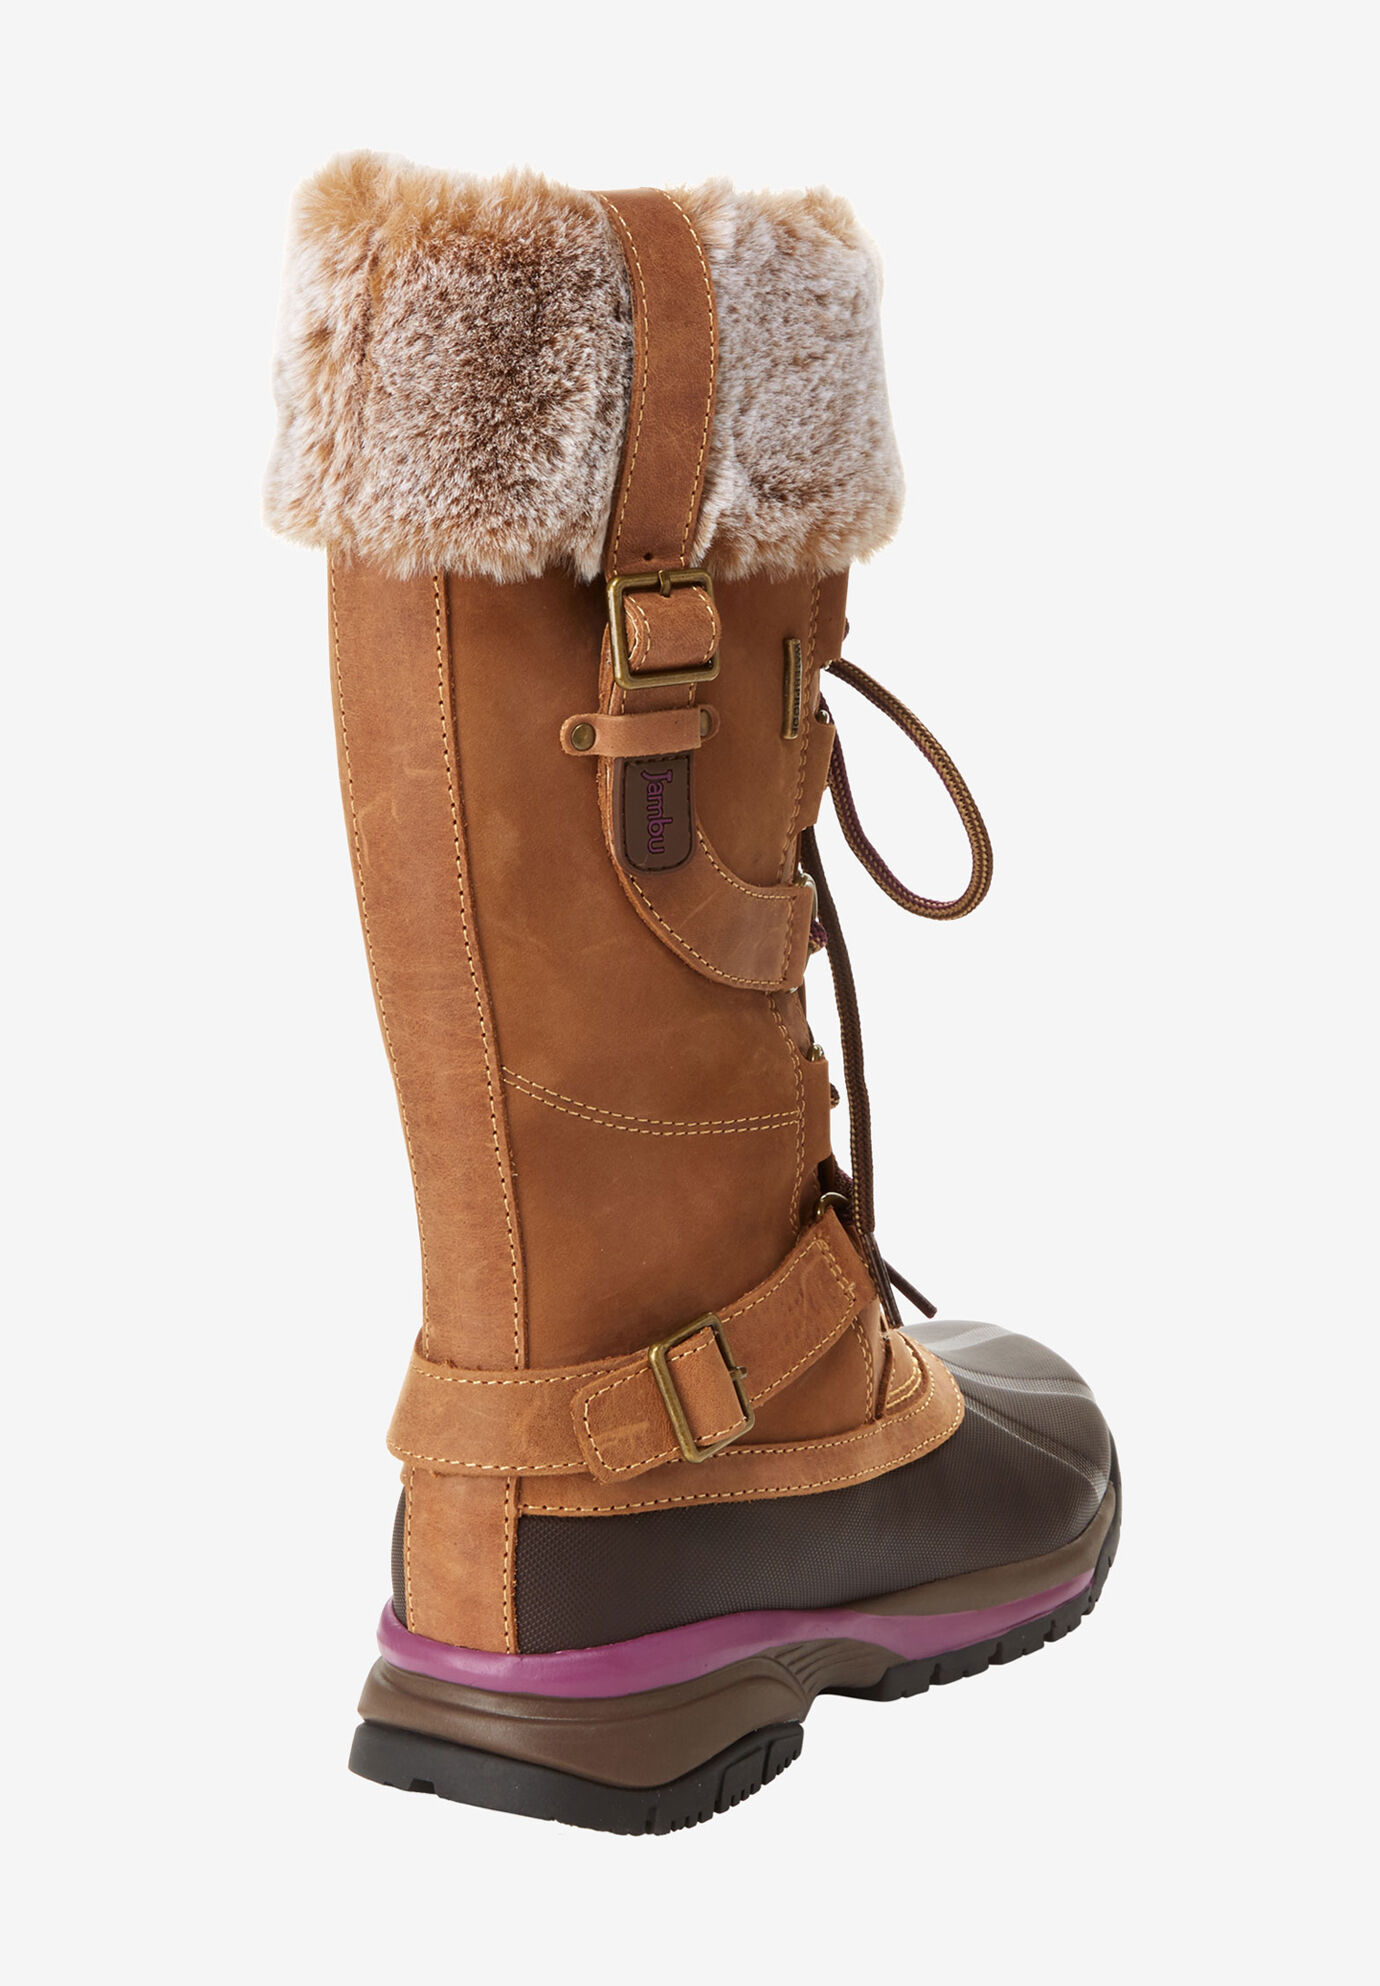 jessica london winter boots